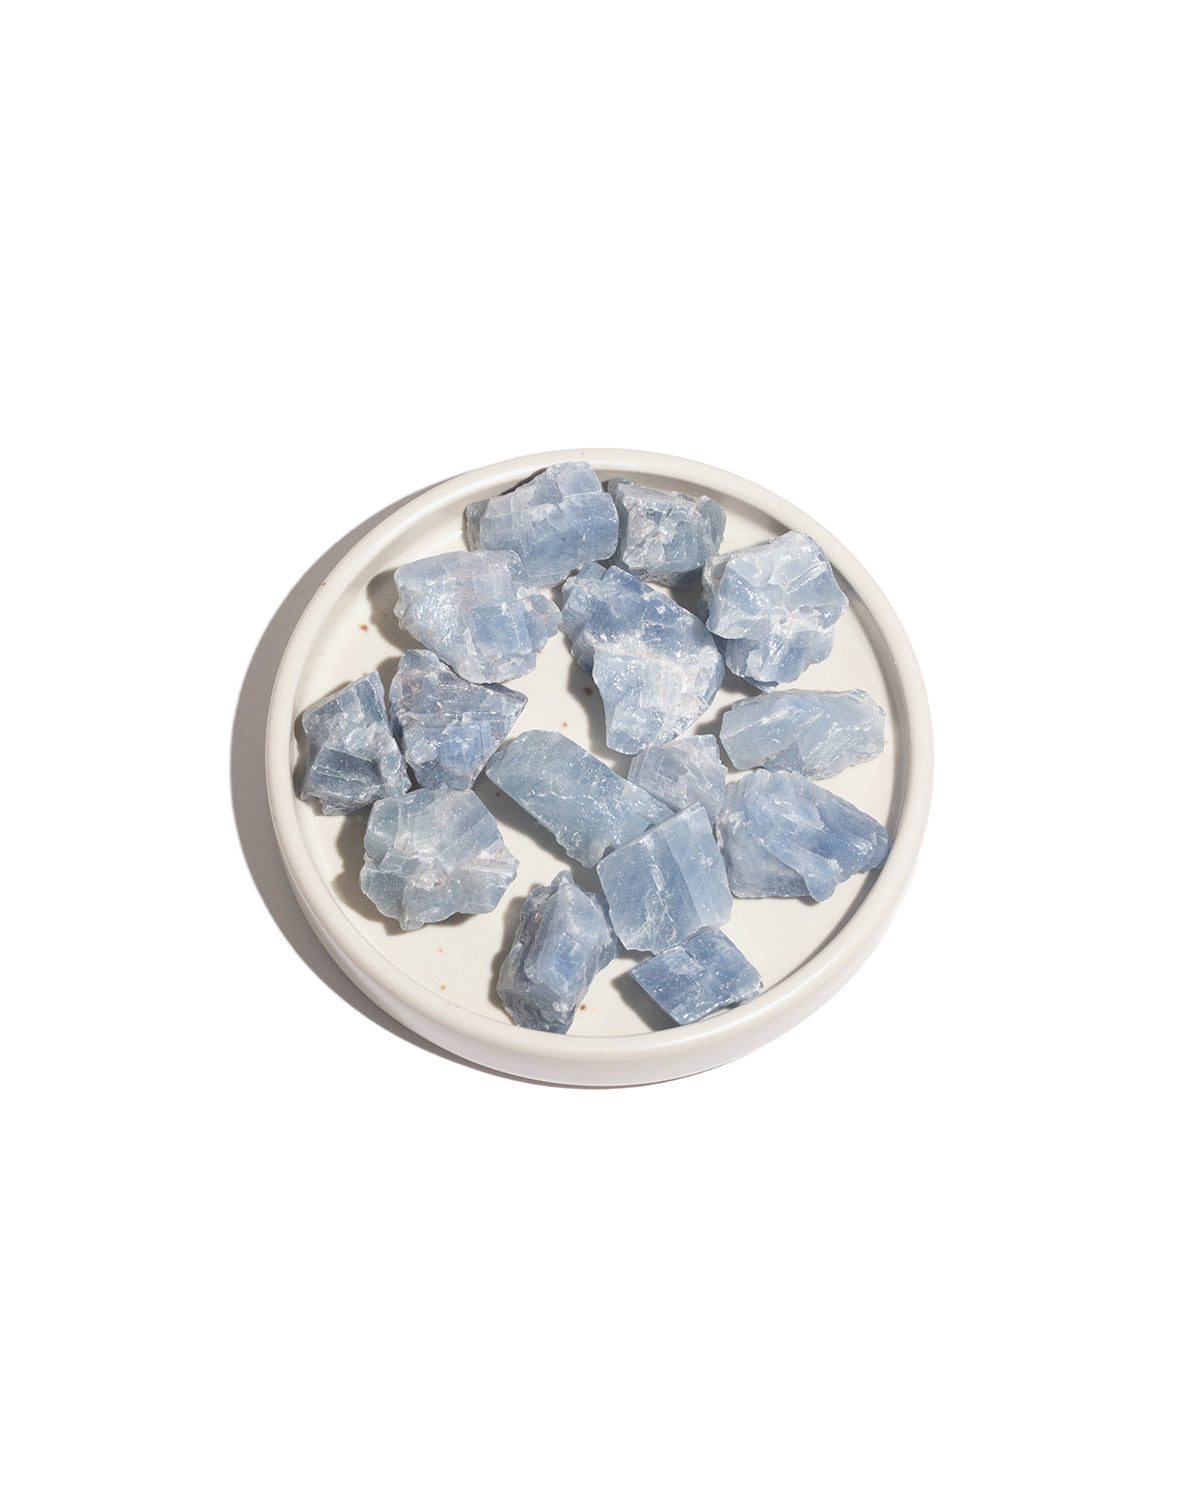 Blue Calcite – Mini Rough Chunks